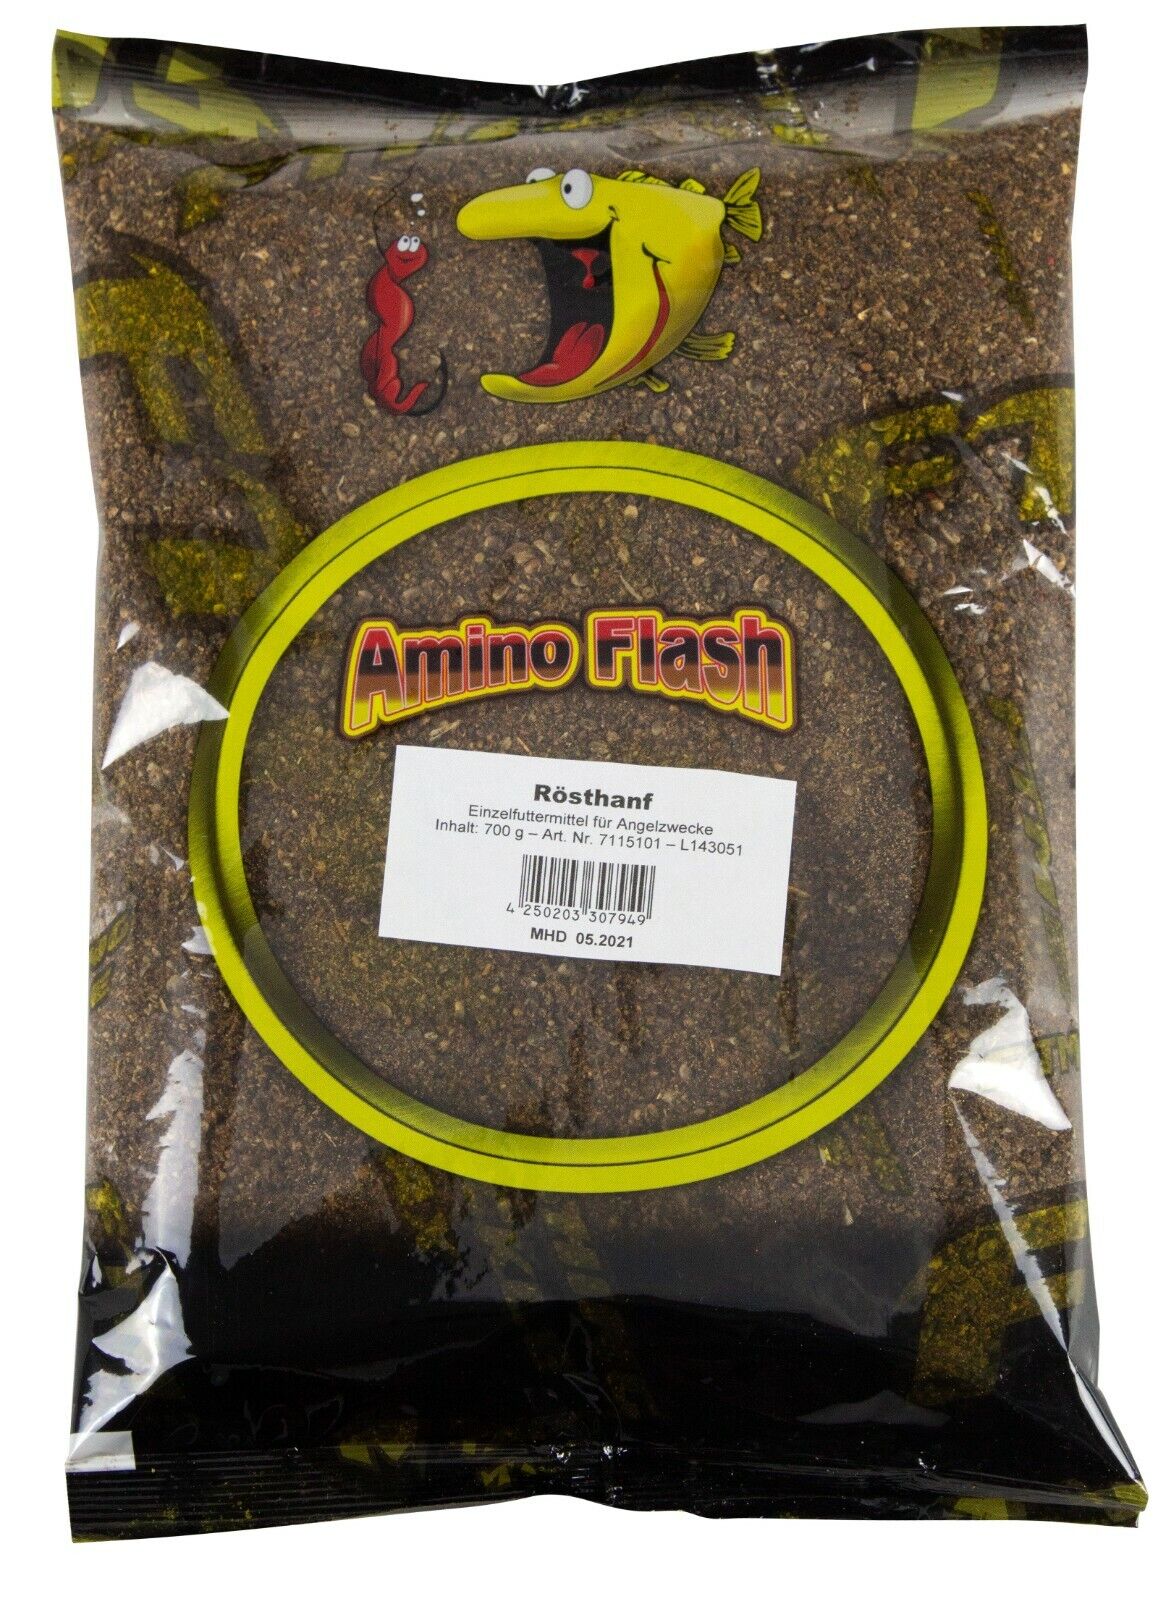 FTM Amino Flash Rösthand 700g